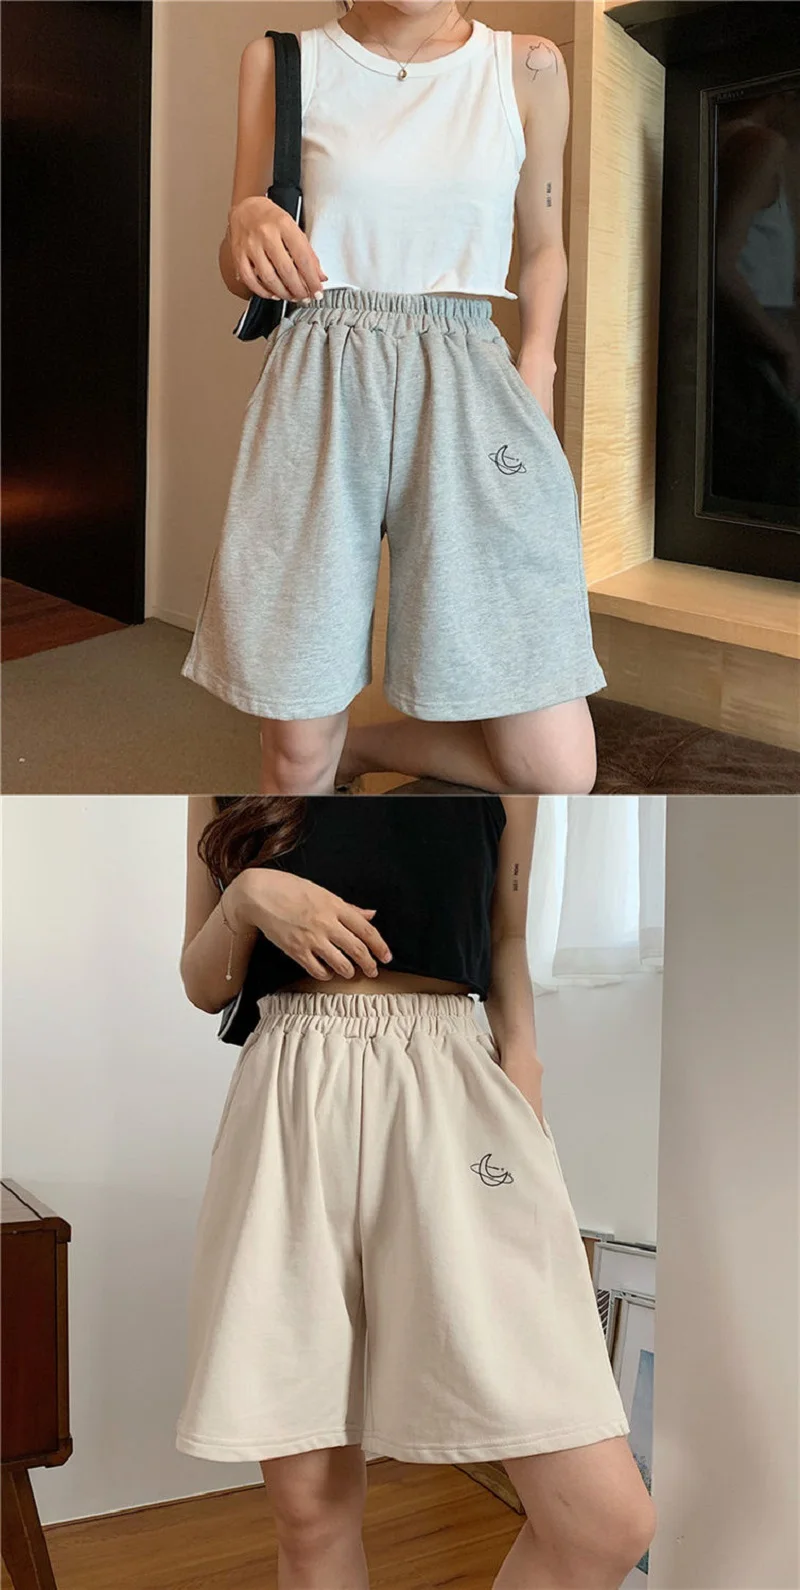 lululemon shorts Elastic Waist Casual Beach Party Korean version clothing size High waist Moon embroidery movement shorts women Summer khaki shorts